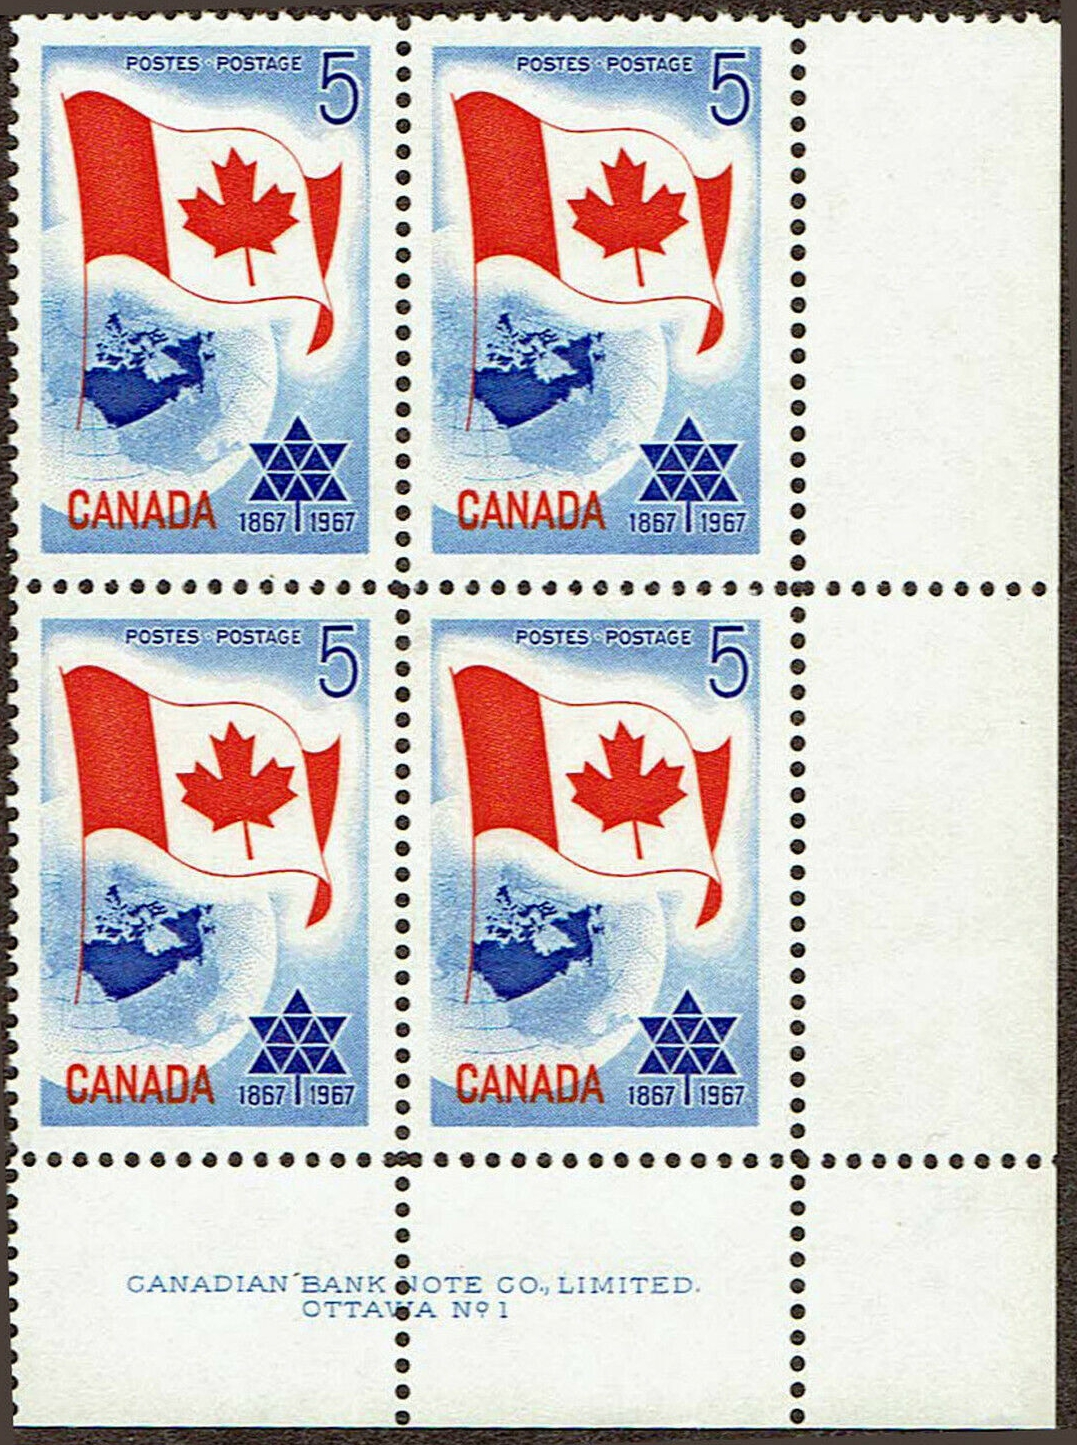 Canada - Scott #453 (1967) block of 4